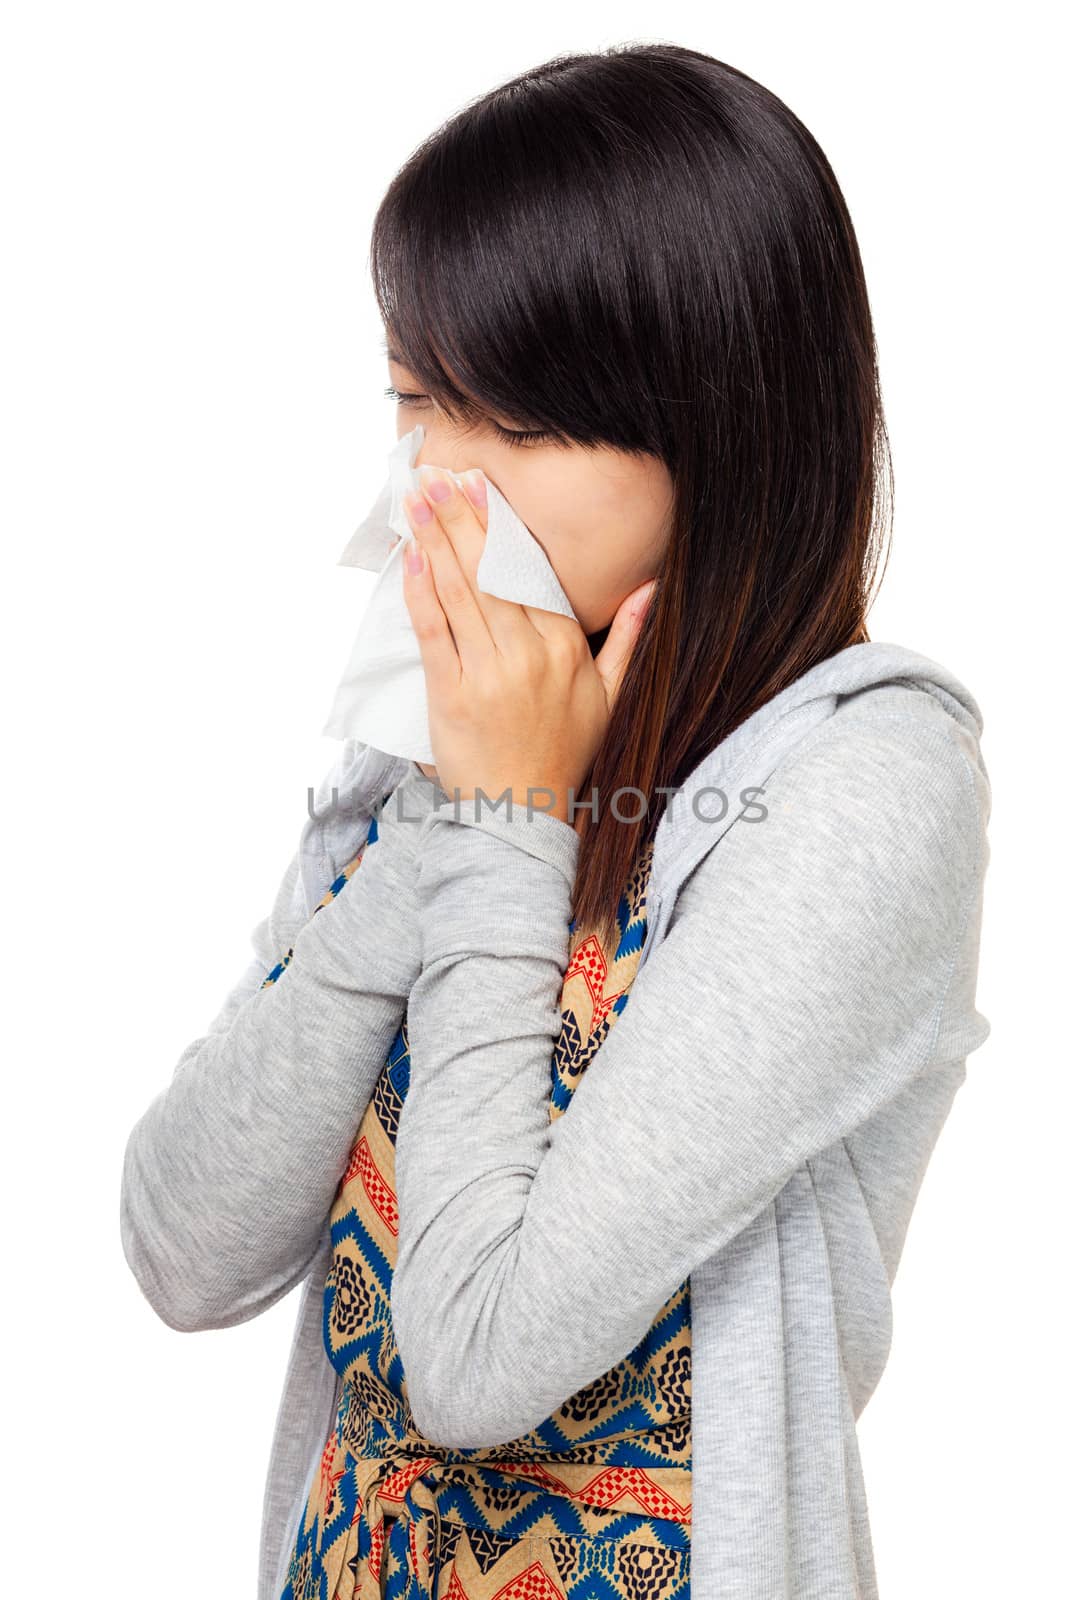 Sneezing asian woman